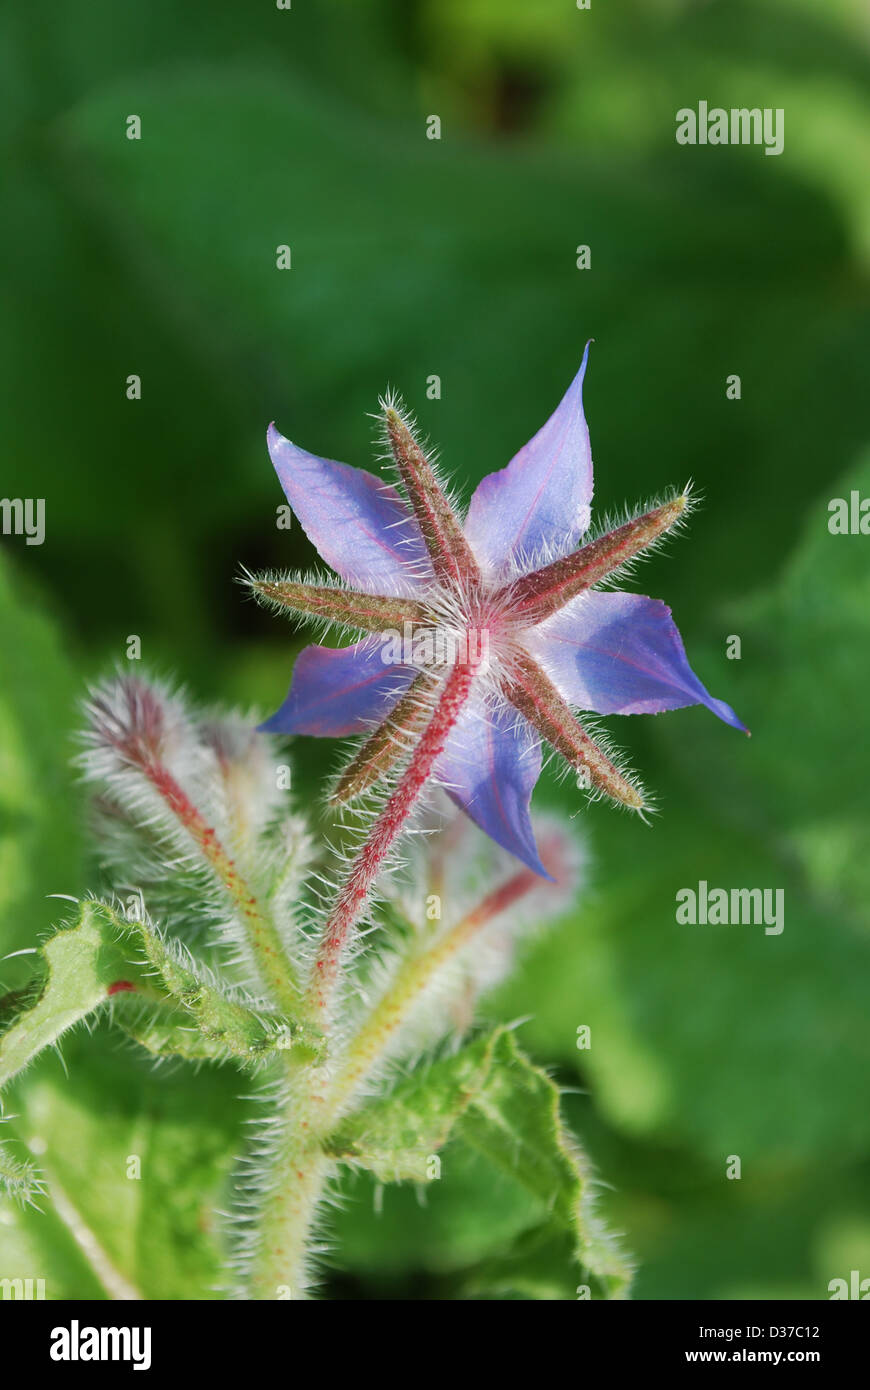 Borage, Borago Officinalis, blue star flower in the garden Stock Photo